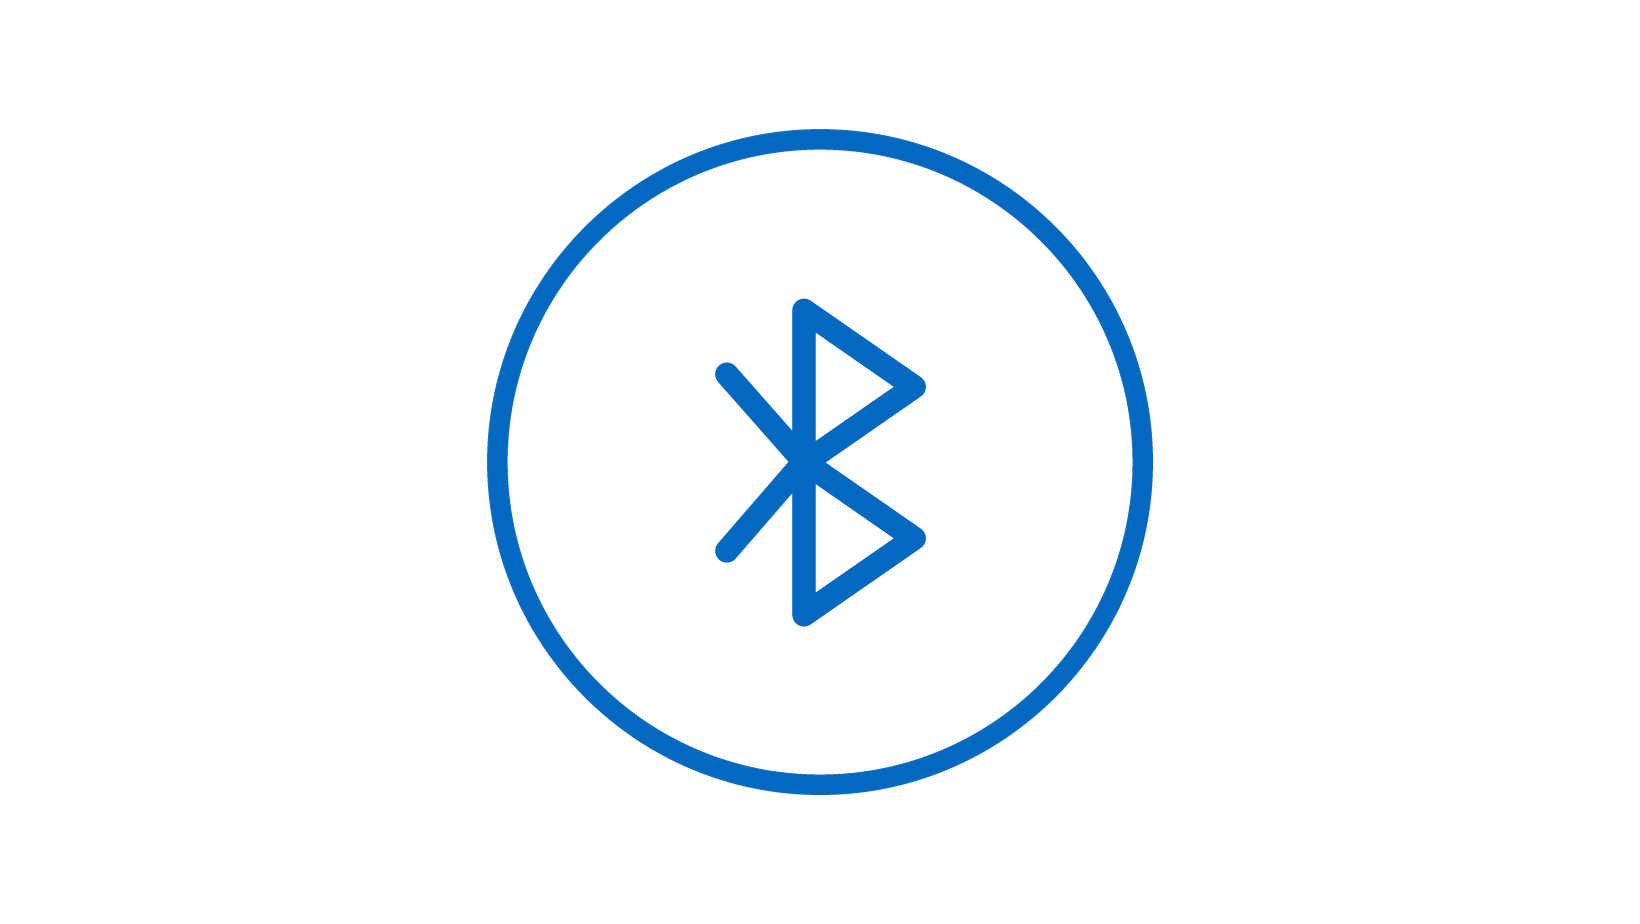 Icon of Bluetooth symbol